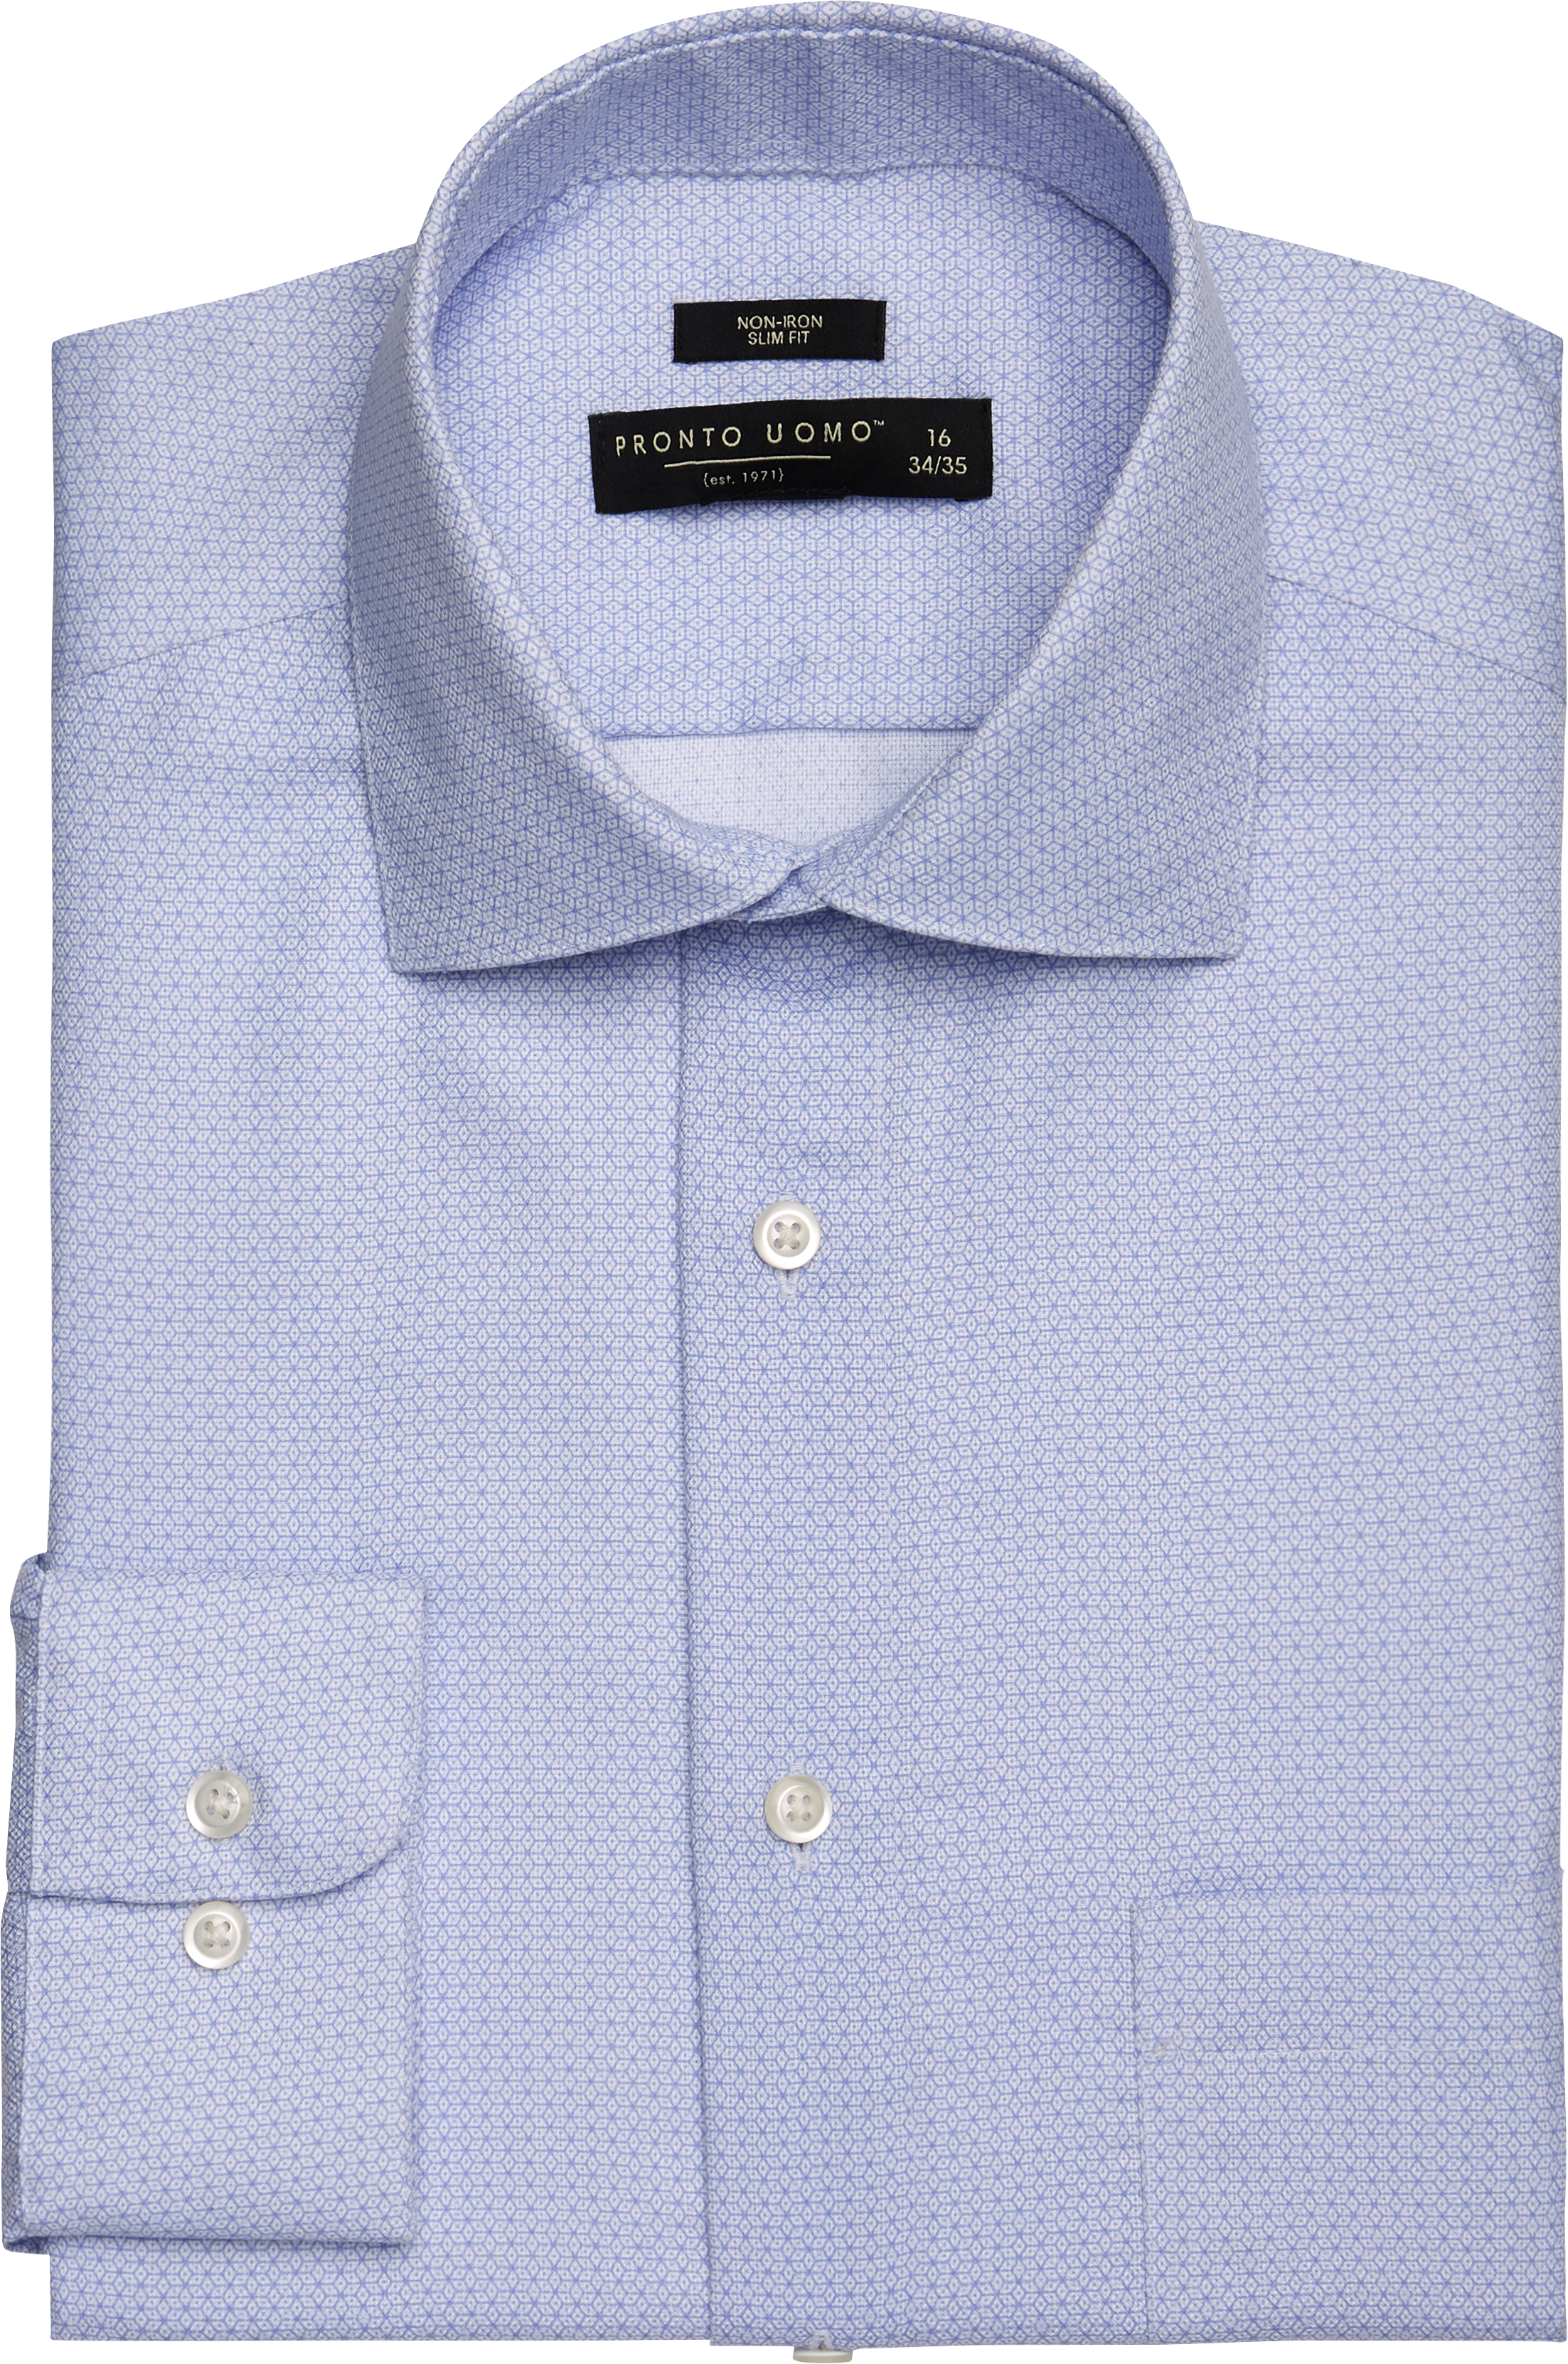 Pronto Uomo Blue Geometric Slim Fit Dress Shirt - Men's Shirts | Men's ...